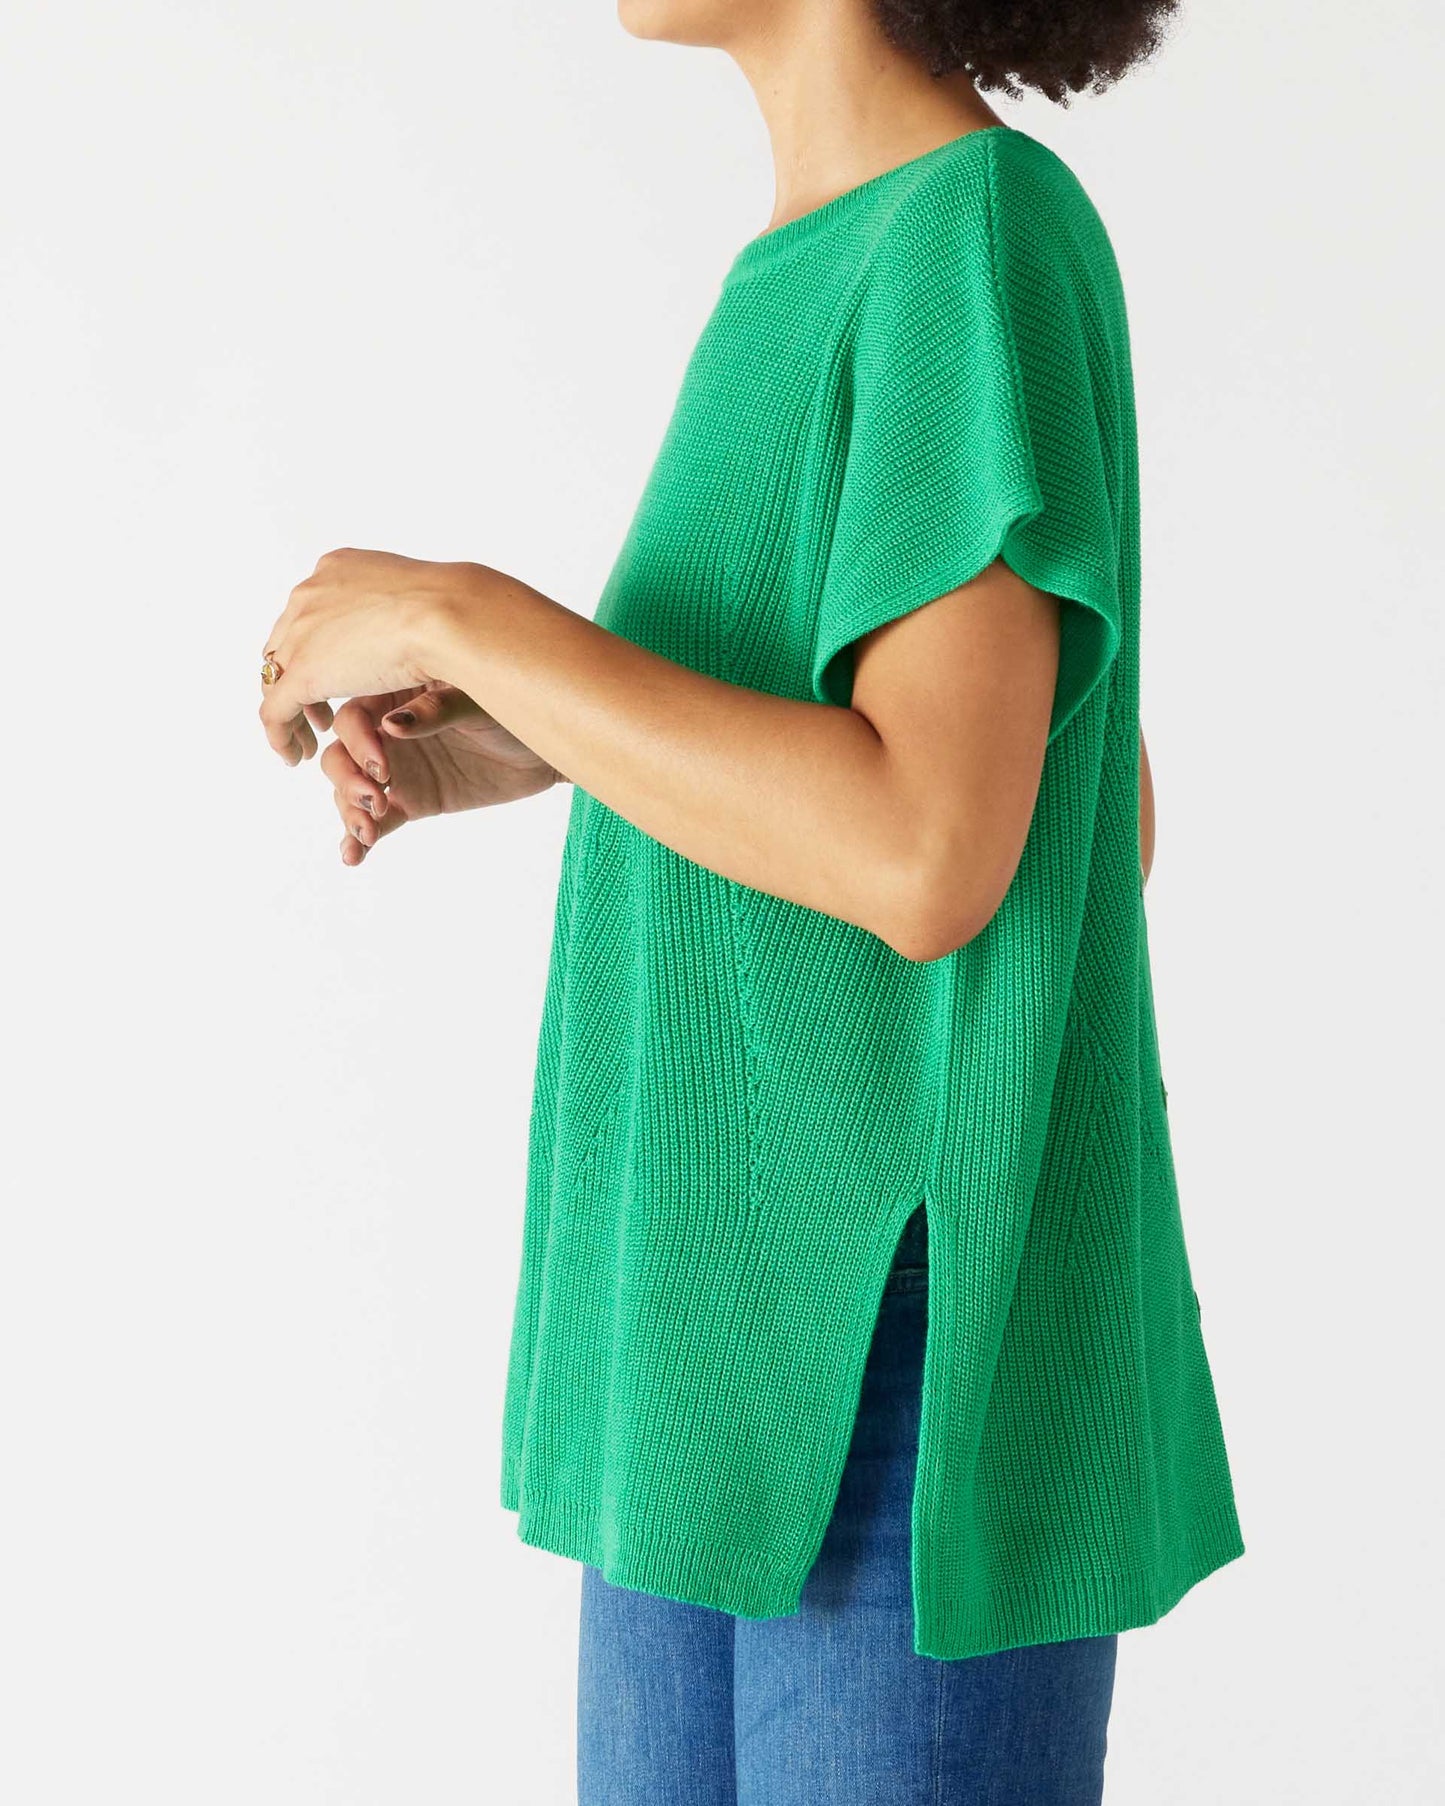 MerSea - Camden Short Sleeve Sweater - Jade Green